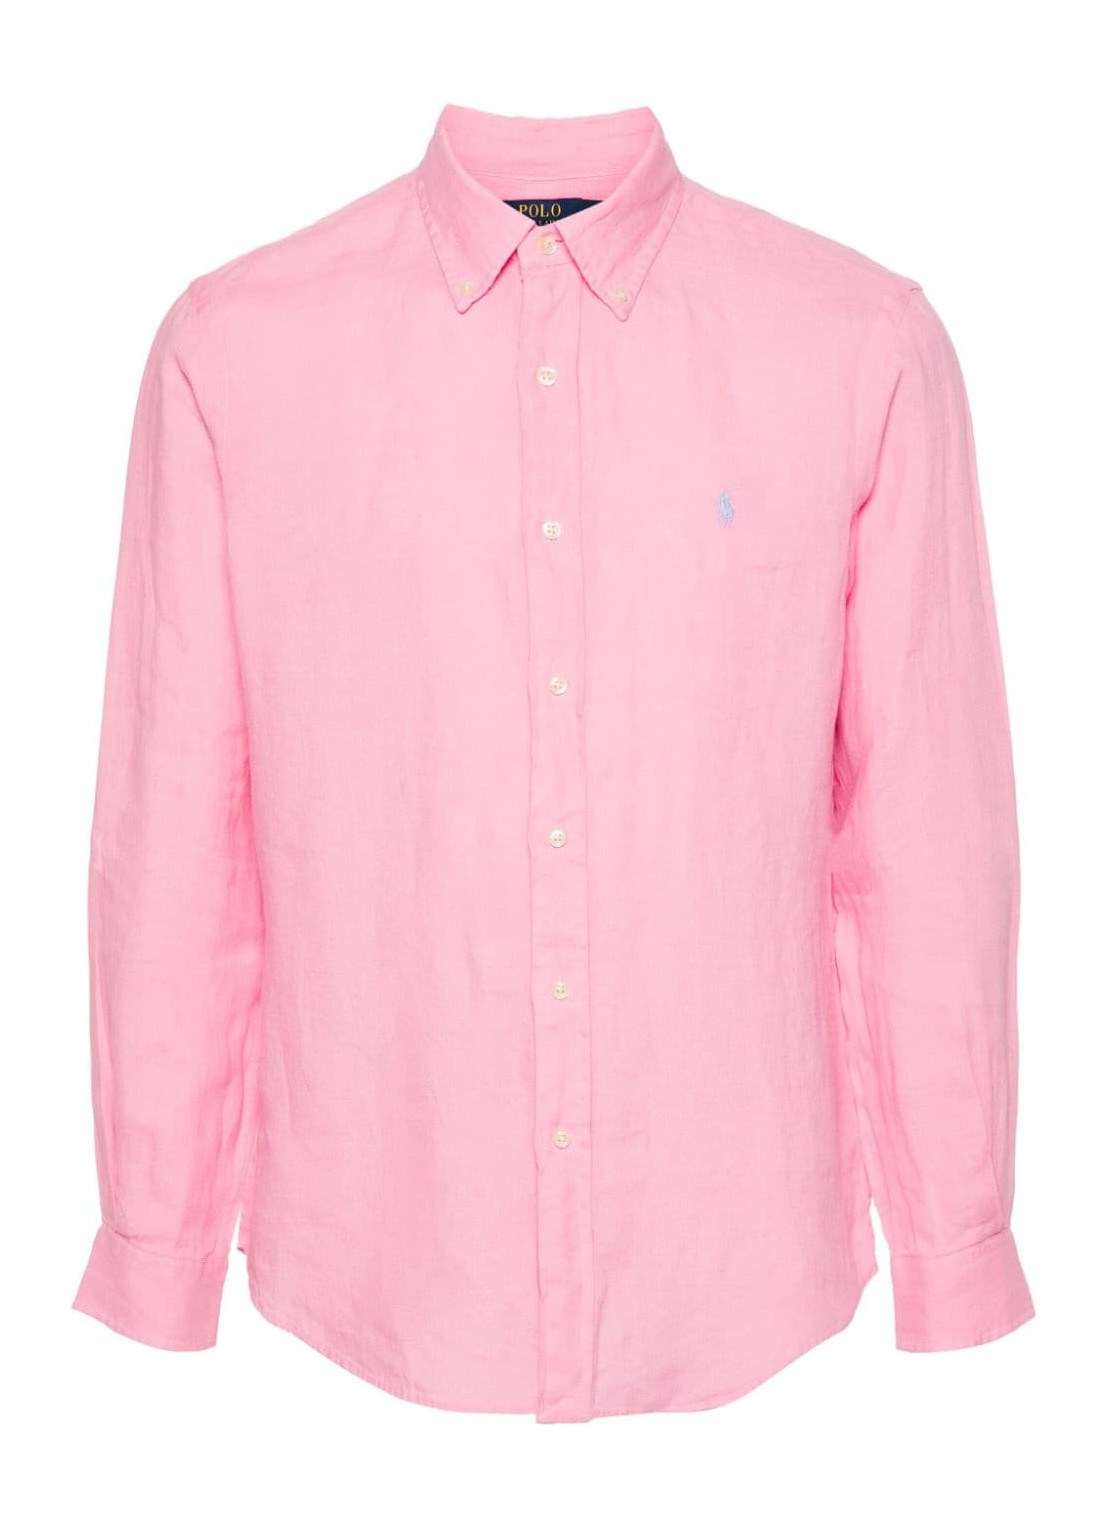 Camiseria polo ralph lauren shirt mancubdppcs-long sleeve-sport shirt - 710794141027 florida pink ta